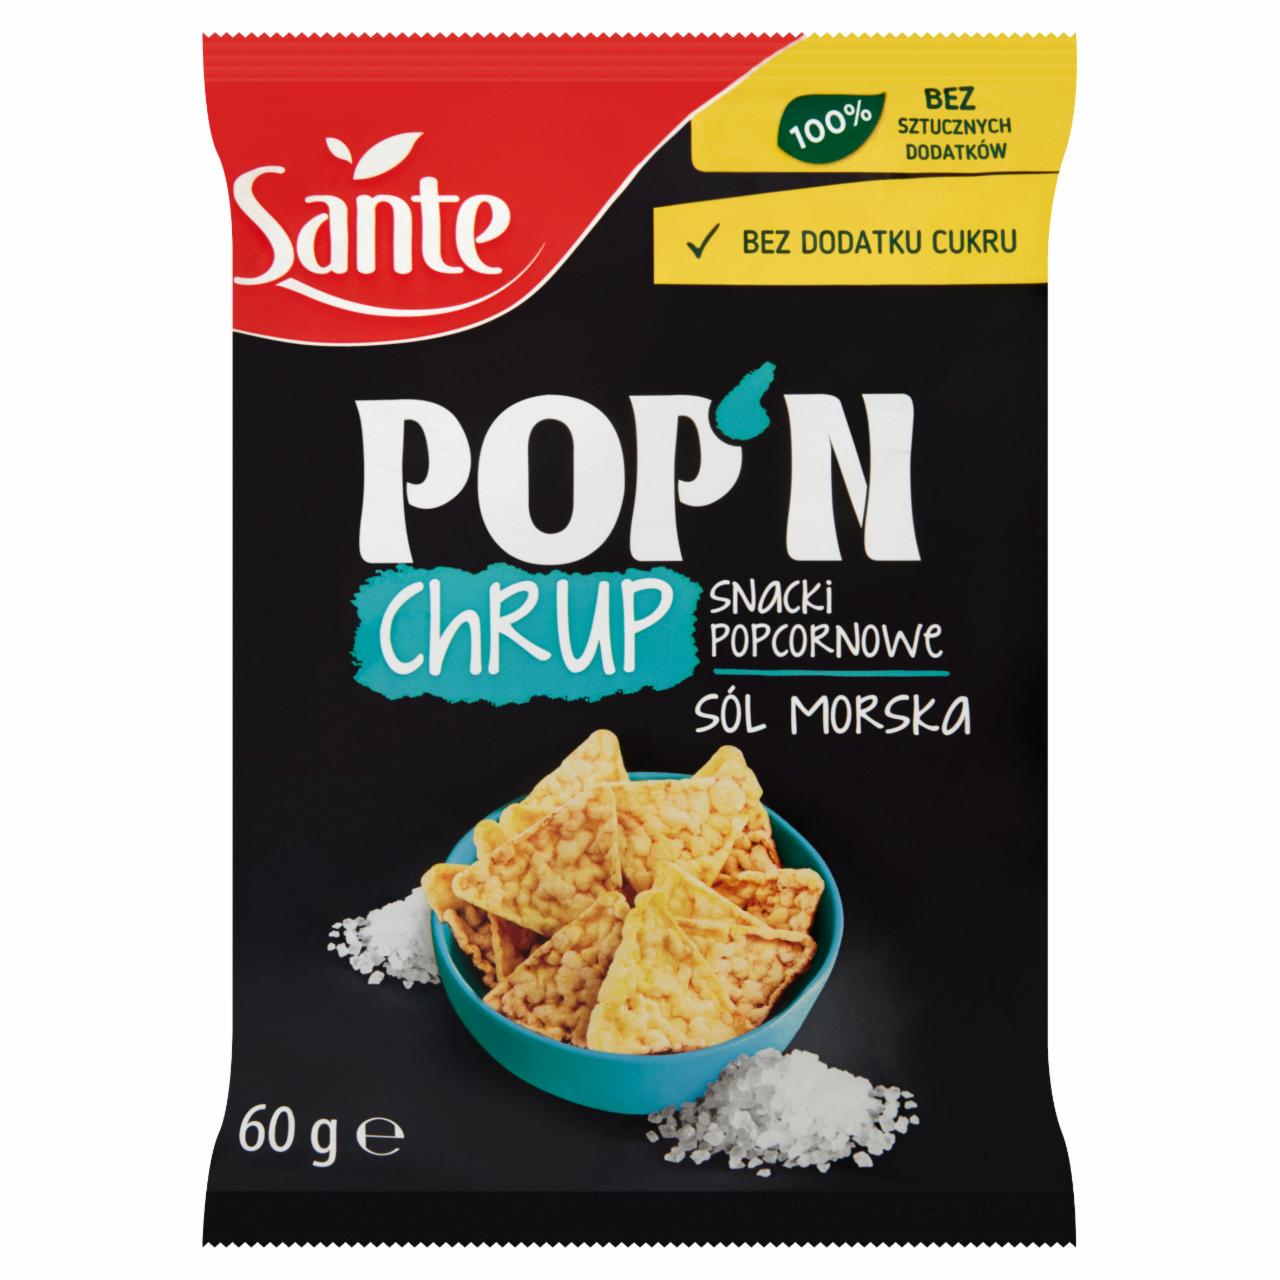 Zdjęcia - Pop'n chrup Snacki popcornowe sól morska 60 g Sante